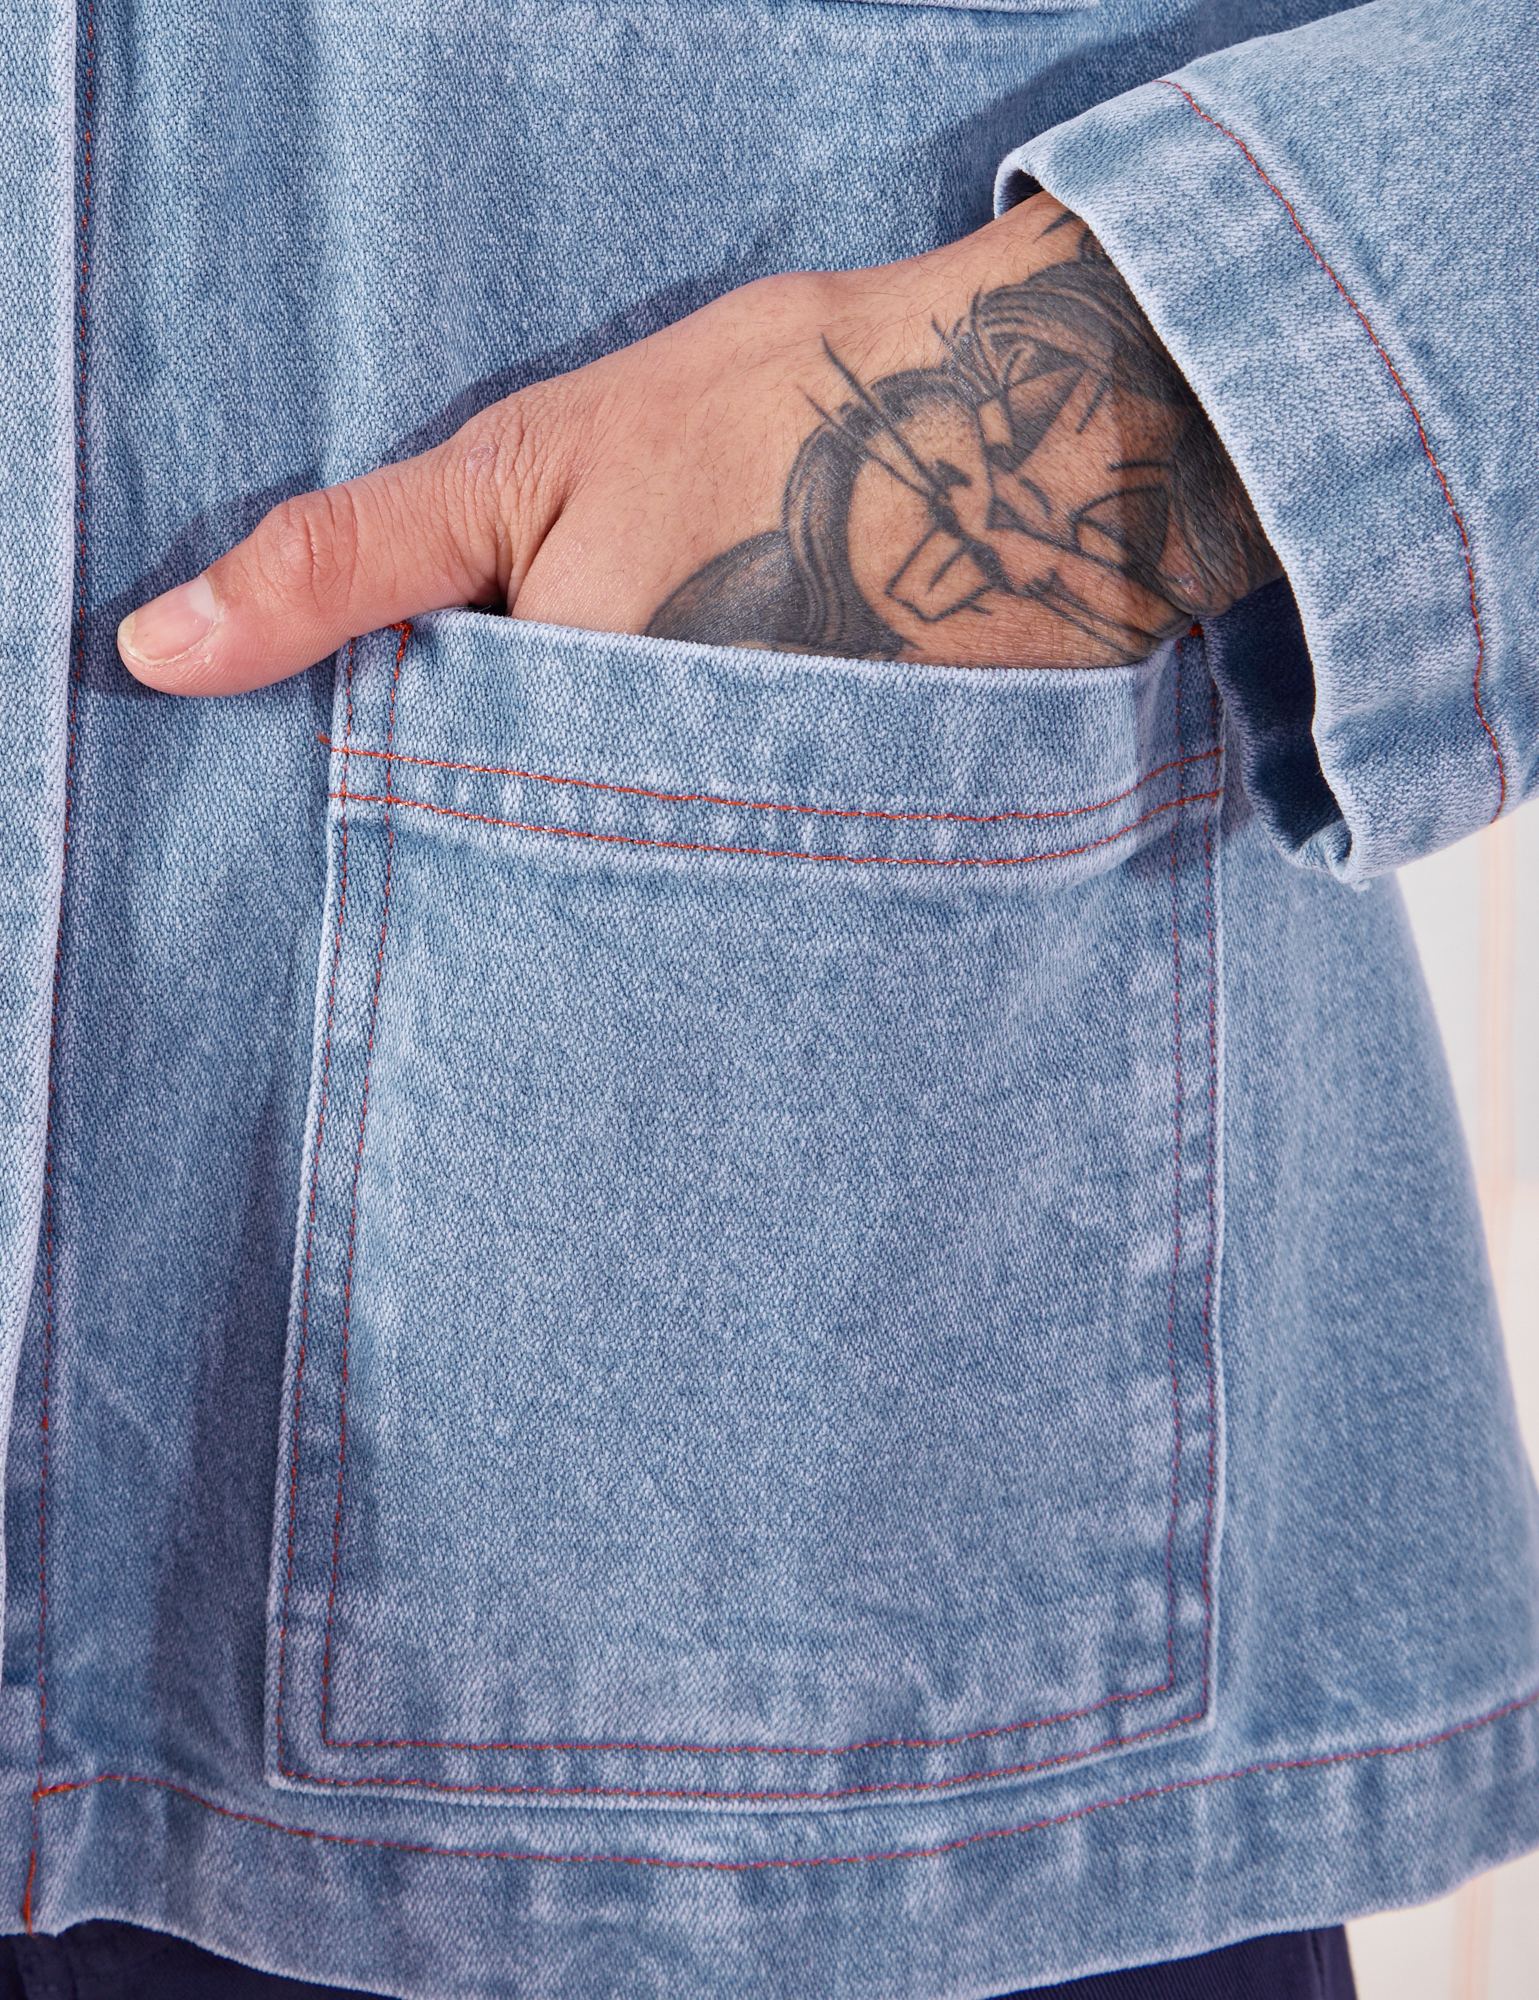 Front pocket close up of Indigo Denim Work Jacket in Light Wash. Jesse has their hand in the pocket.